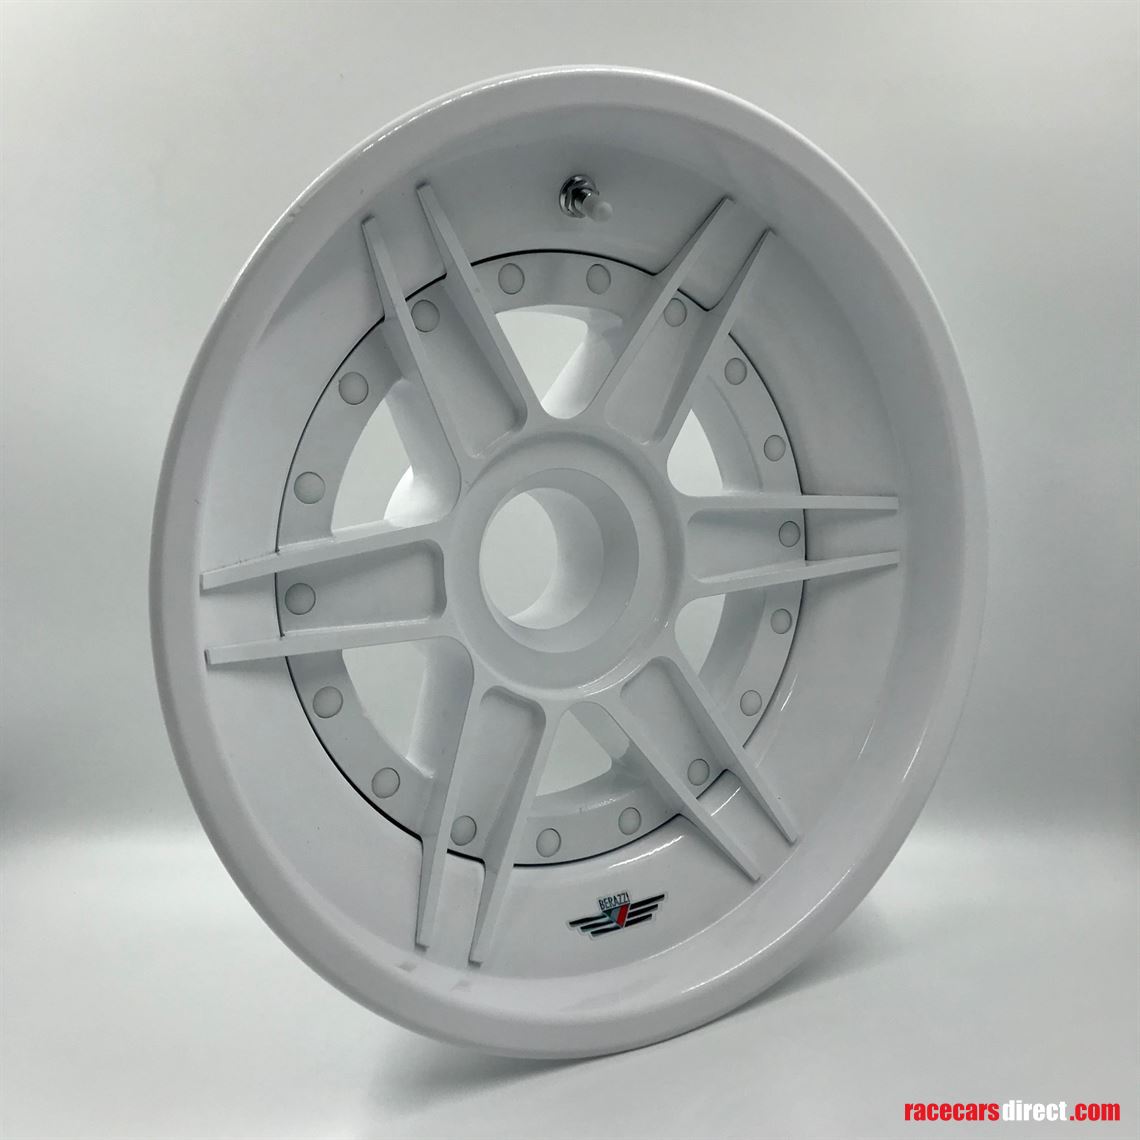 berazzi-racing-wheels